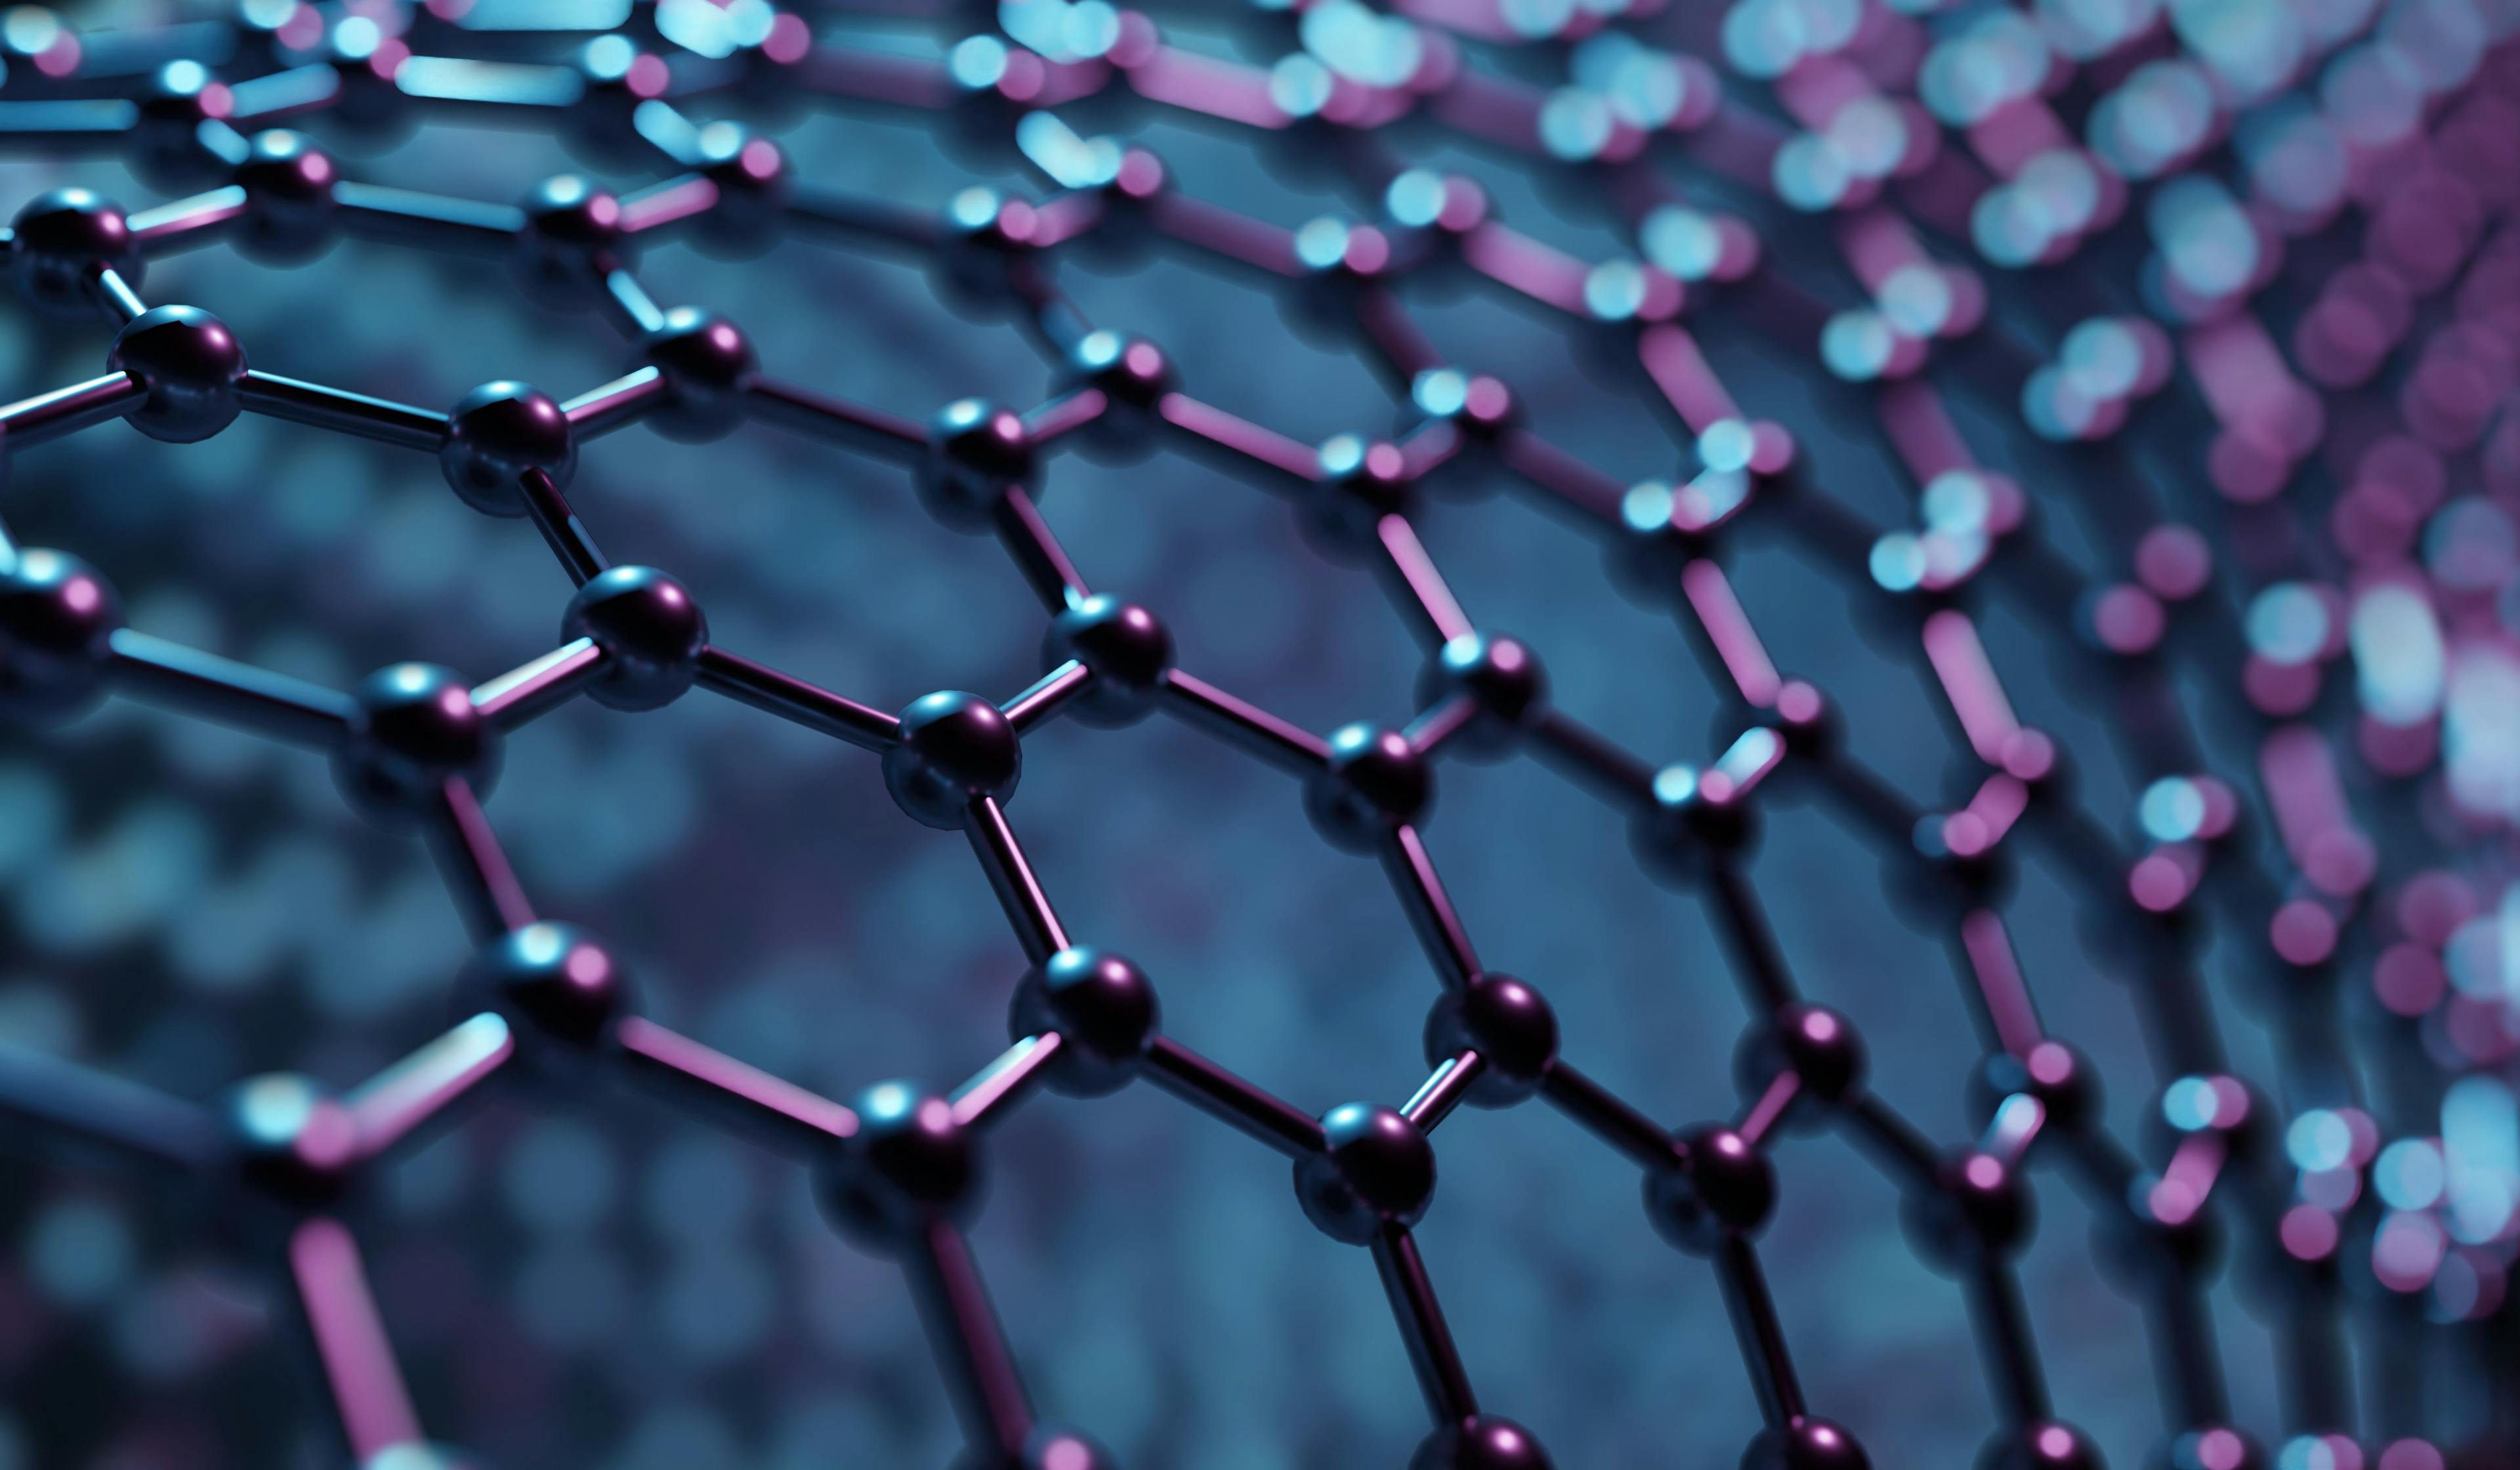 Structure of hexagonal nano material. Nanotechnology concept. | Image Credit: © vchalup - stock.adobe.com